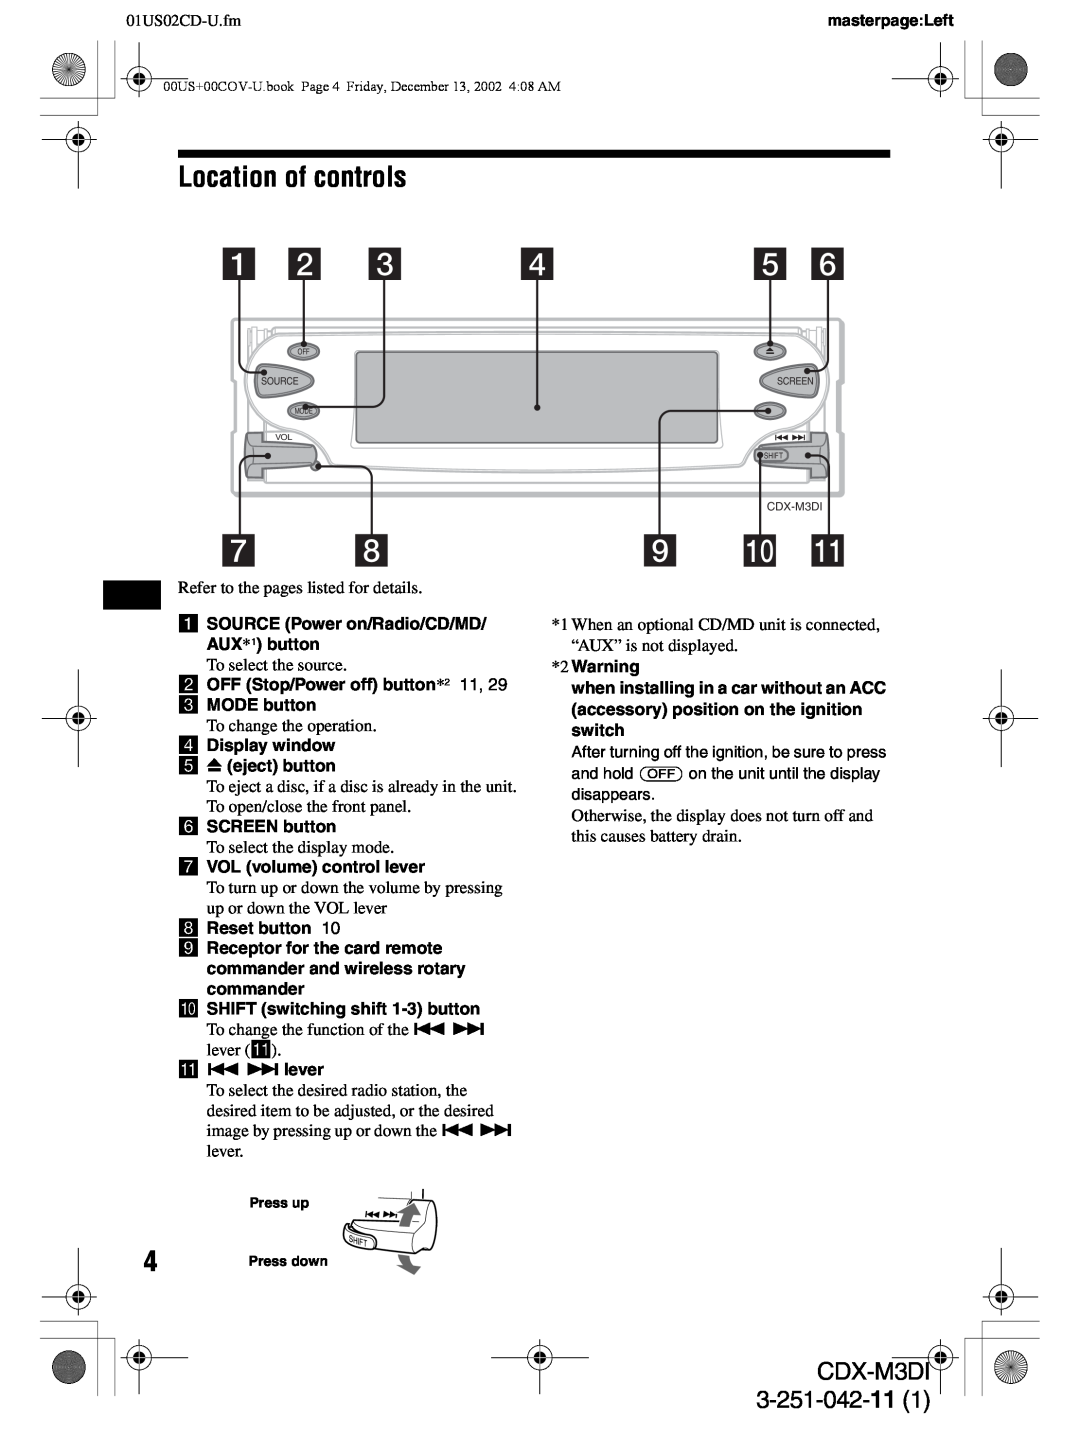 Sony CDX-M3DI operating instructions Location of controls, 3-251-042-11, 01US02CD-U.fm 